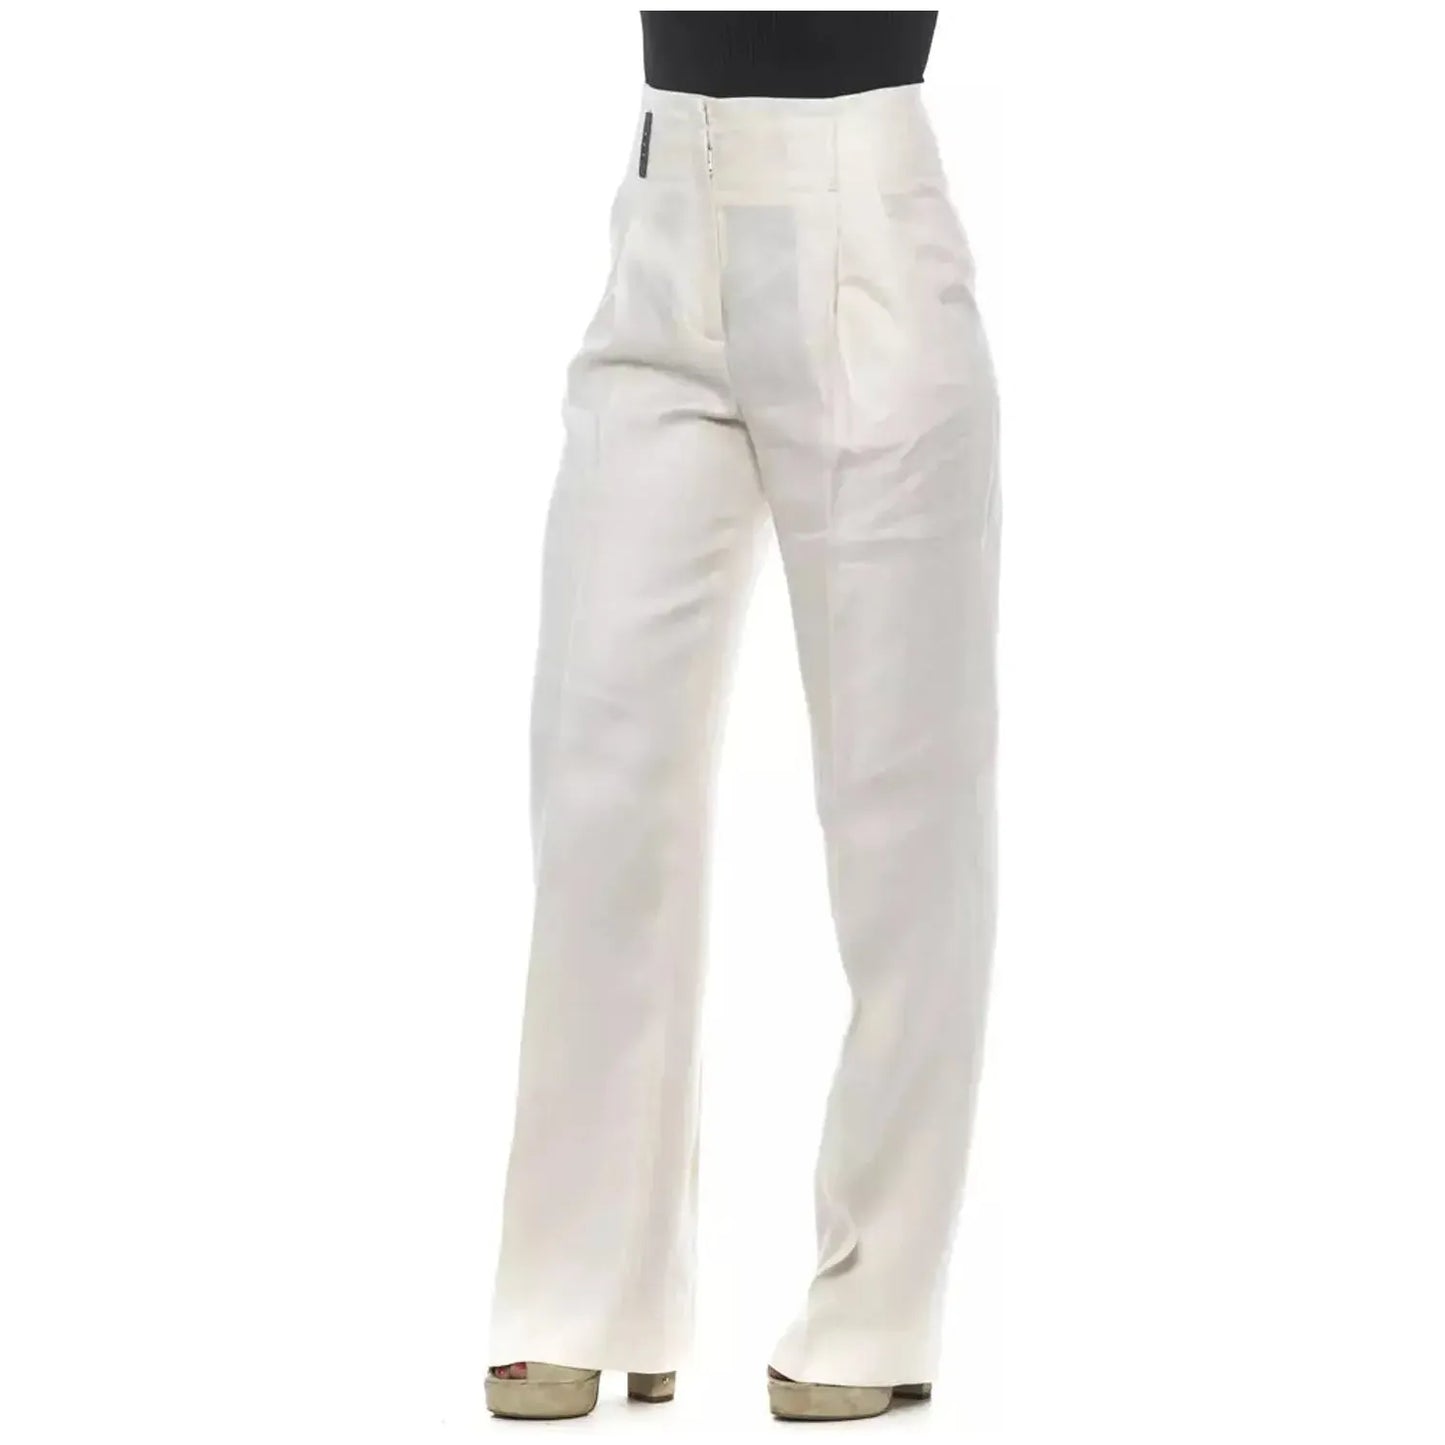 Peserico Elegant High-Waisted Flax Palazzo Pants beige-white-flax-jeans-pants stock_product_image_21257_800339052-19-b38c4b36-73f.webp